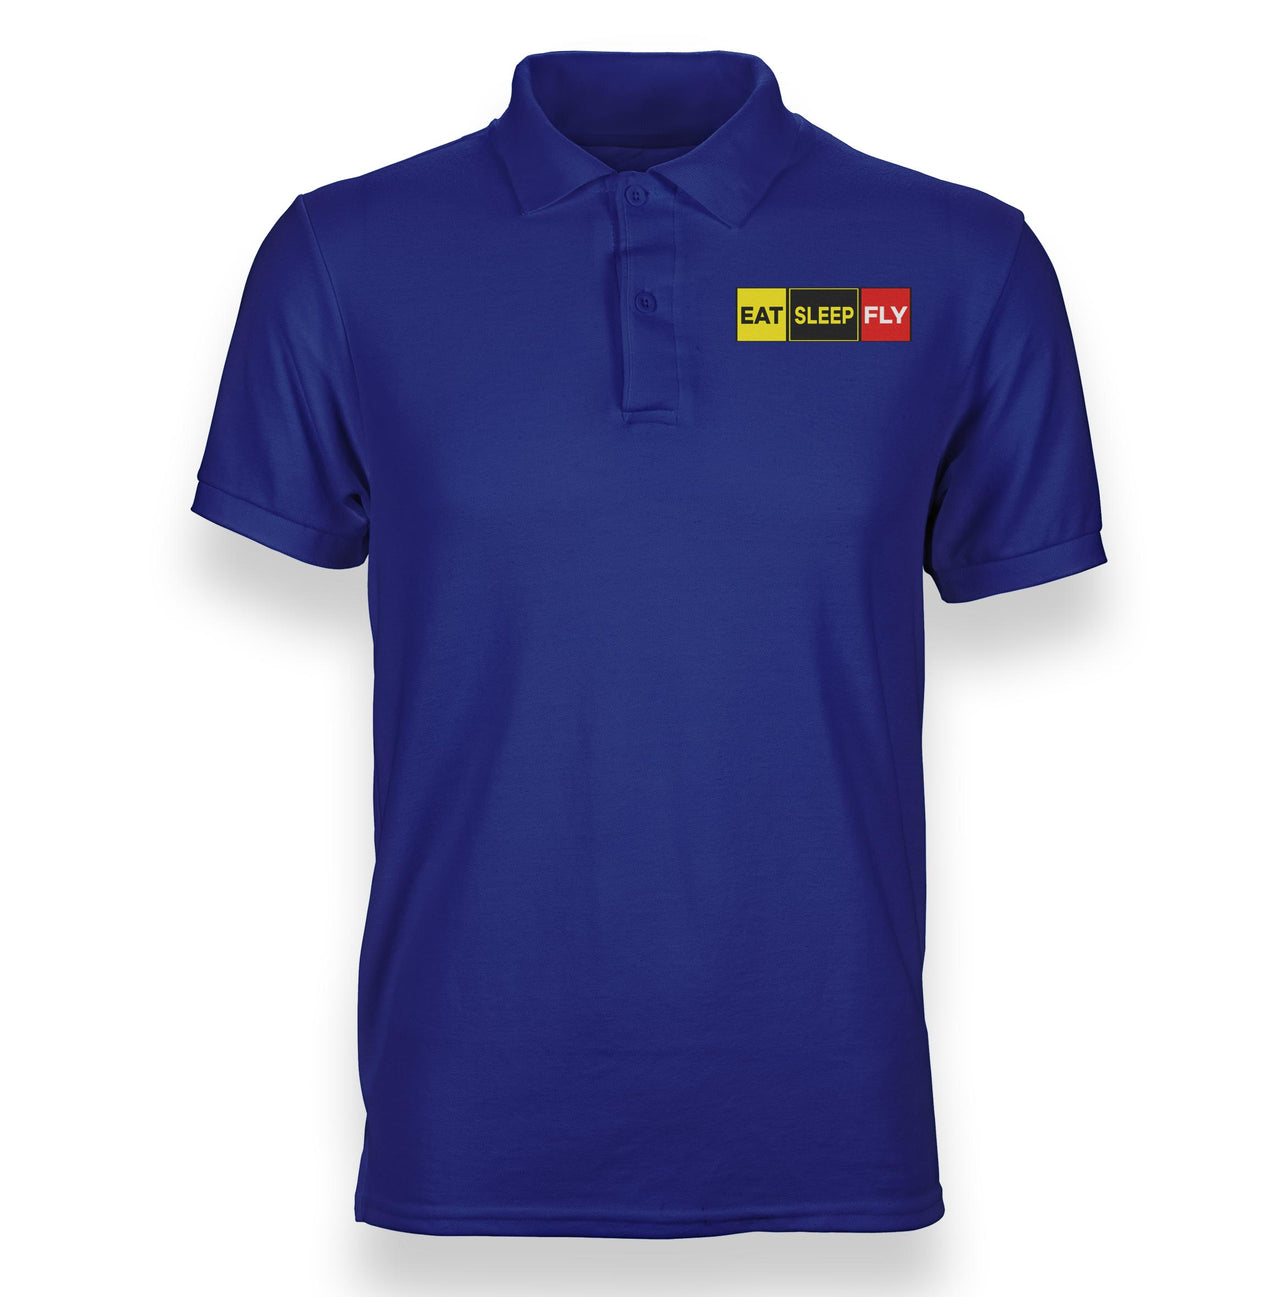 Eat Sleep Fly (Colourful) Designed Polo T-Shirts